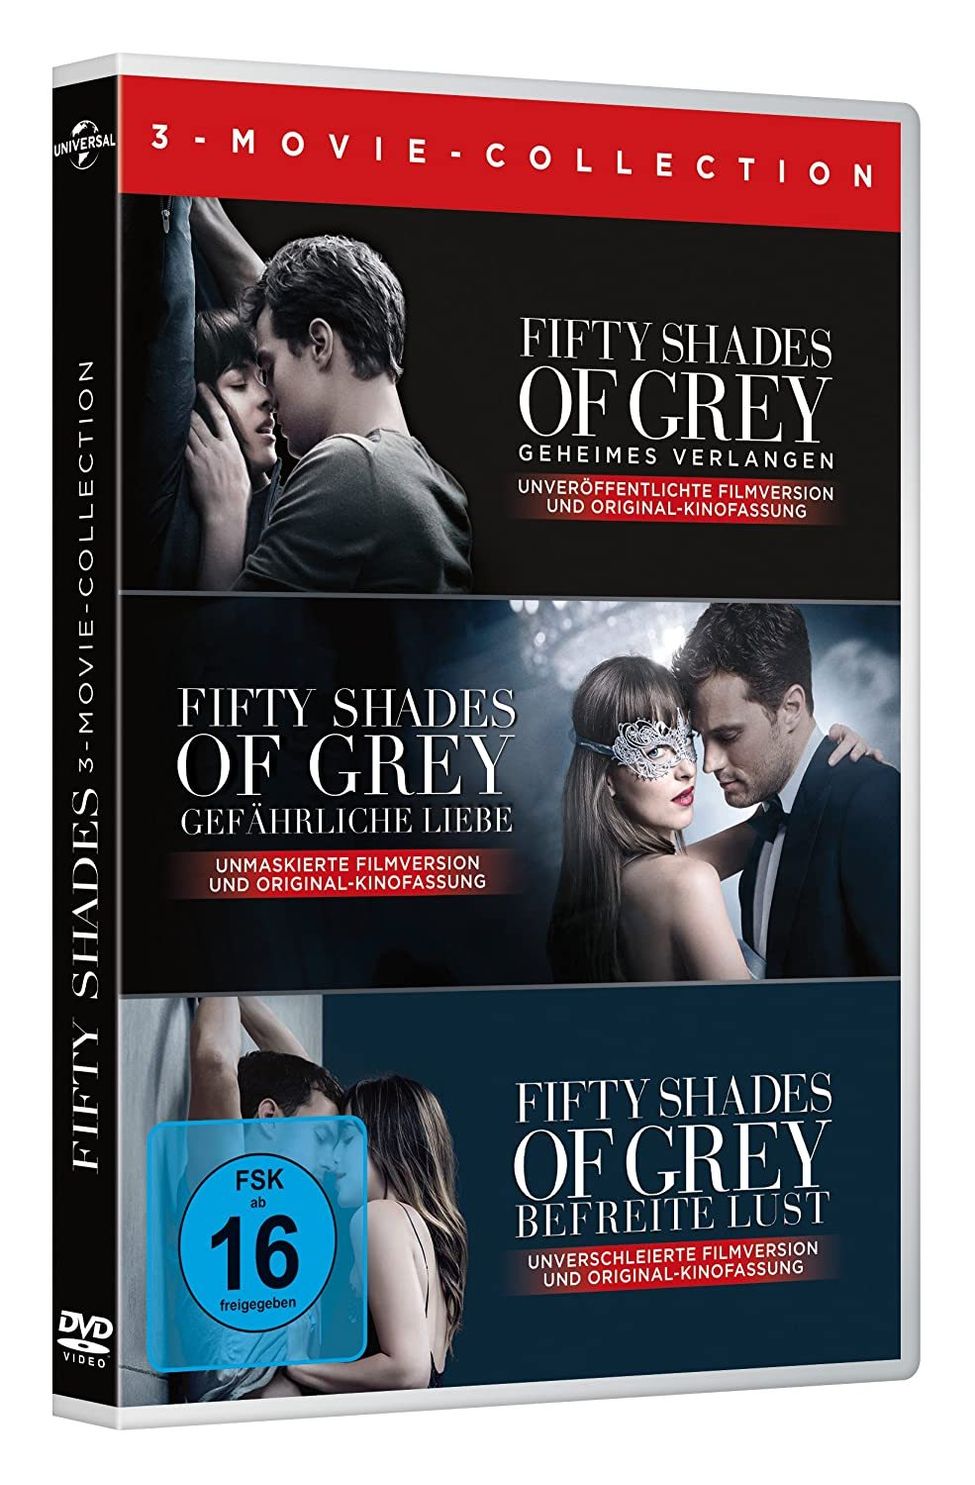 Fifty Shades of Grey 1-3 Box DVD bei Weltbild.at bestellen